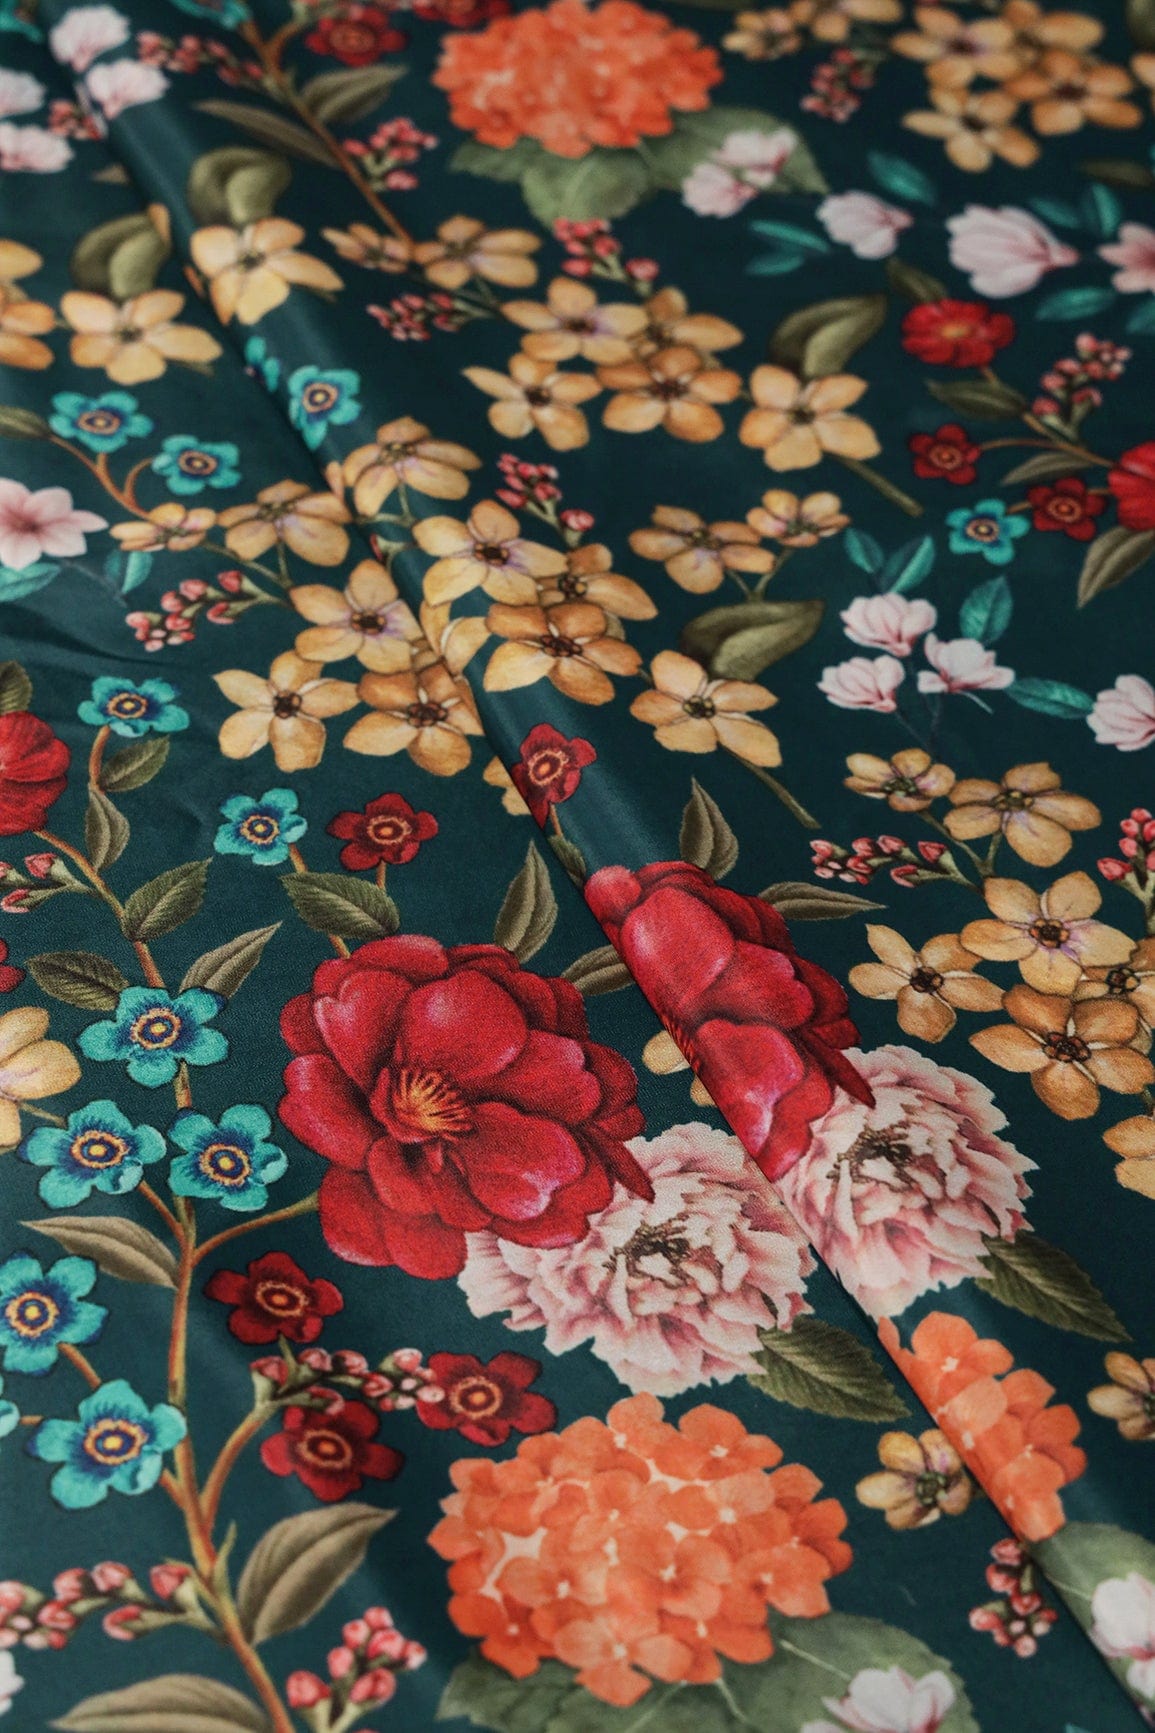 doeraa Prints Multi Color Floral Pattern Digital Print On Prussian Blue Malai Crepe Fabric